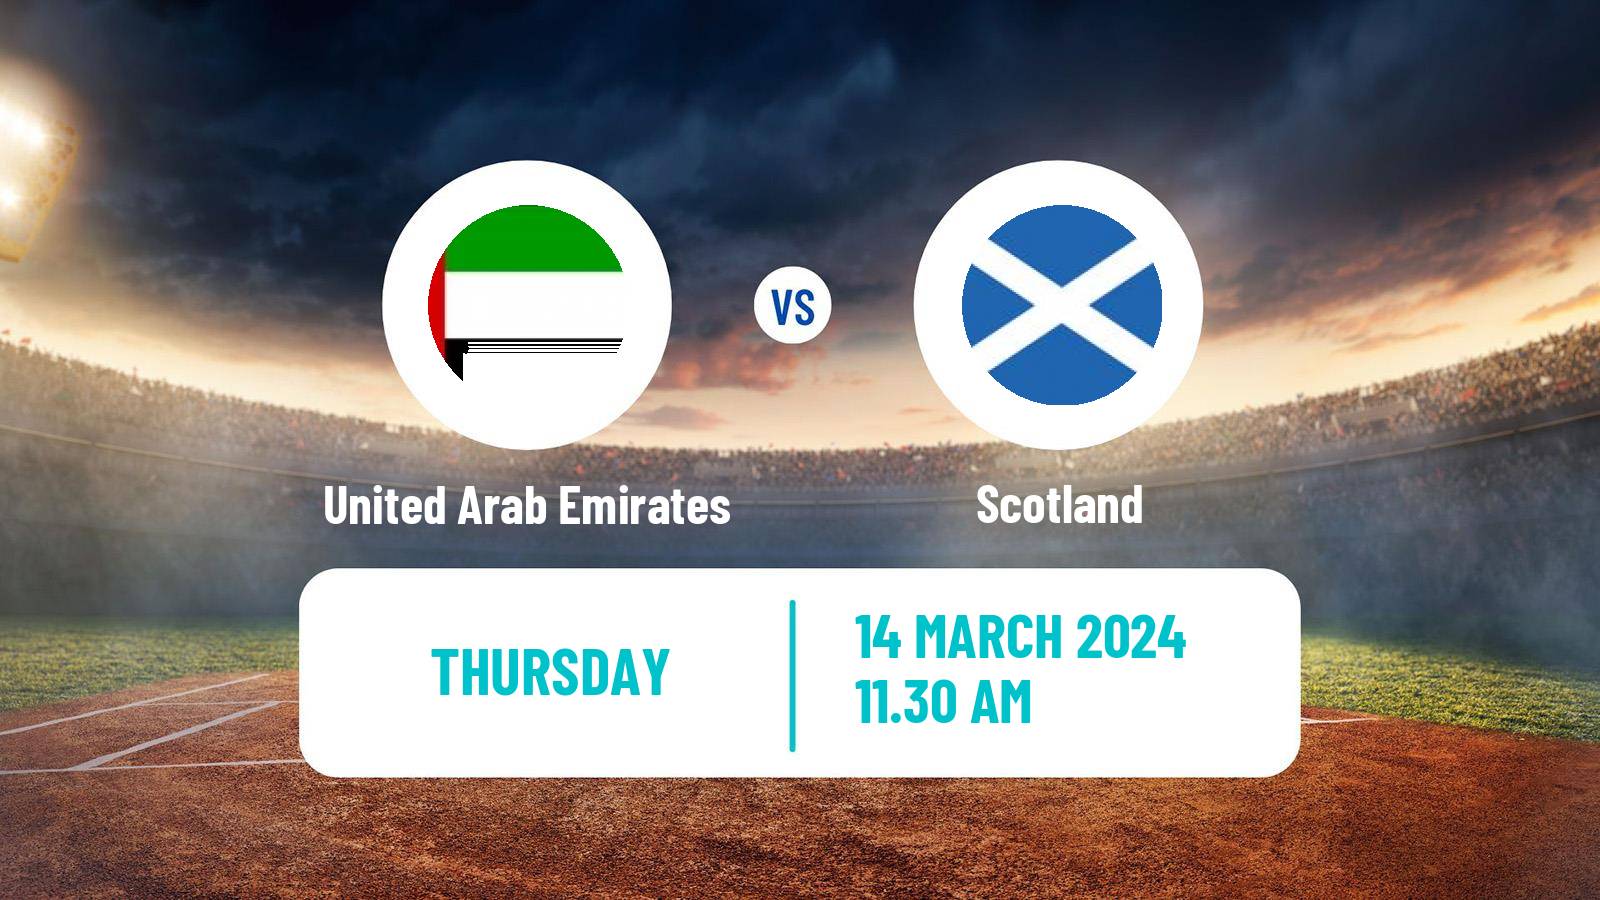 Cricket Twenty20 International United Arab Emirates - Scotland